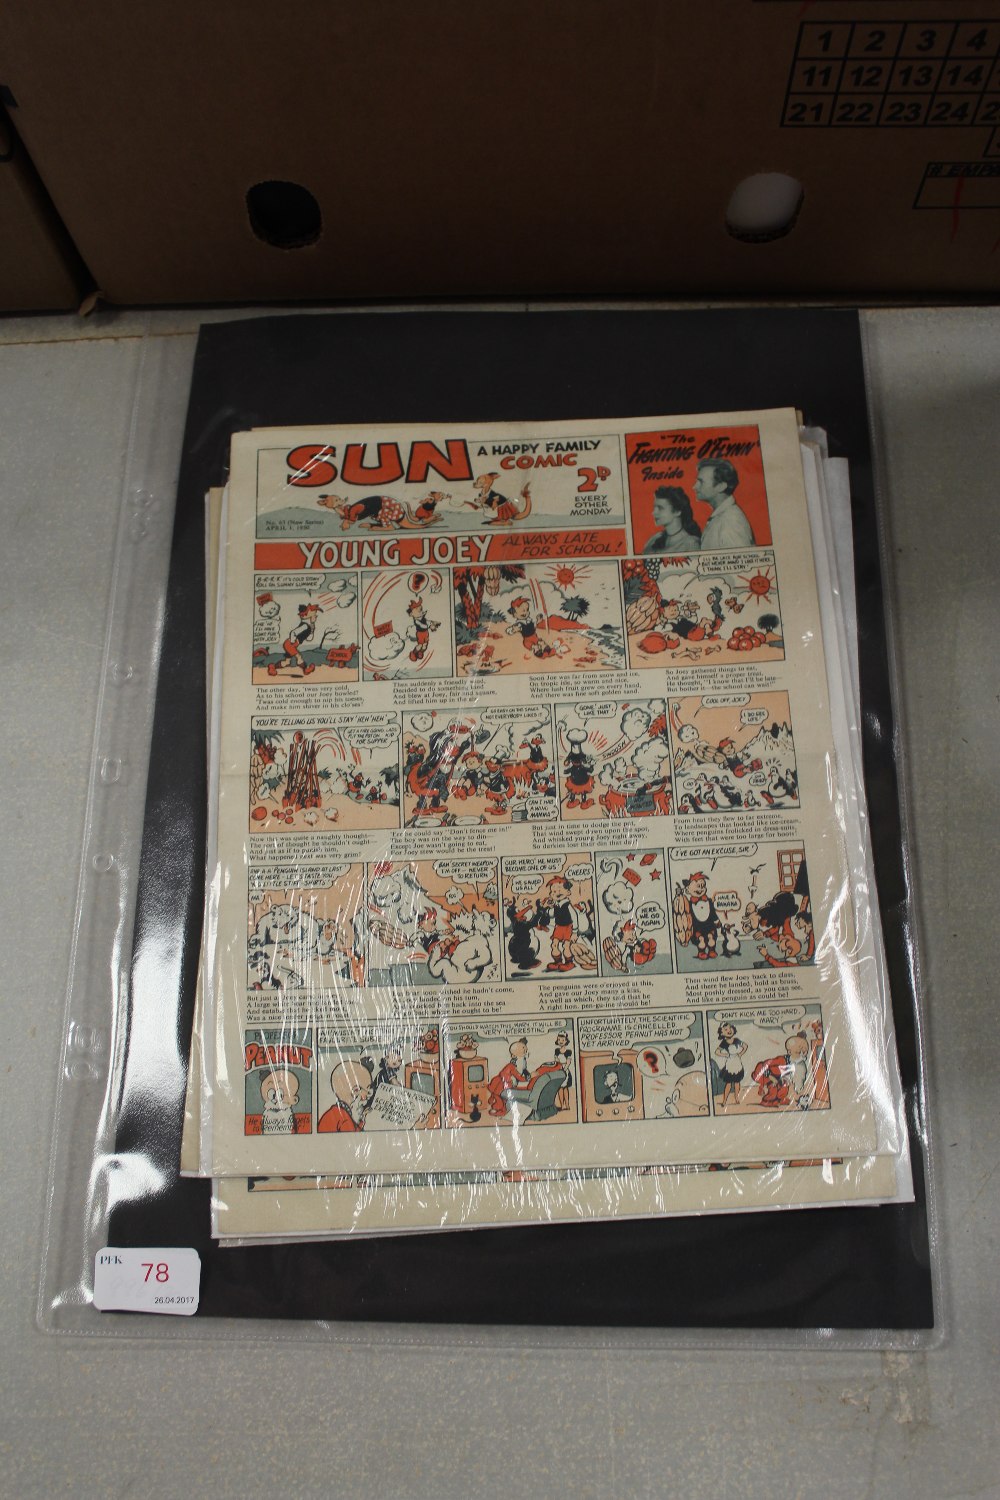 Sun comics #'s 63, 85, Comet comics 101, 103, 104, all 1950, all very good condition